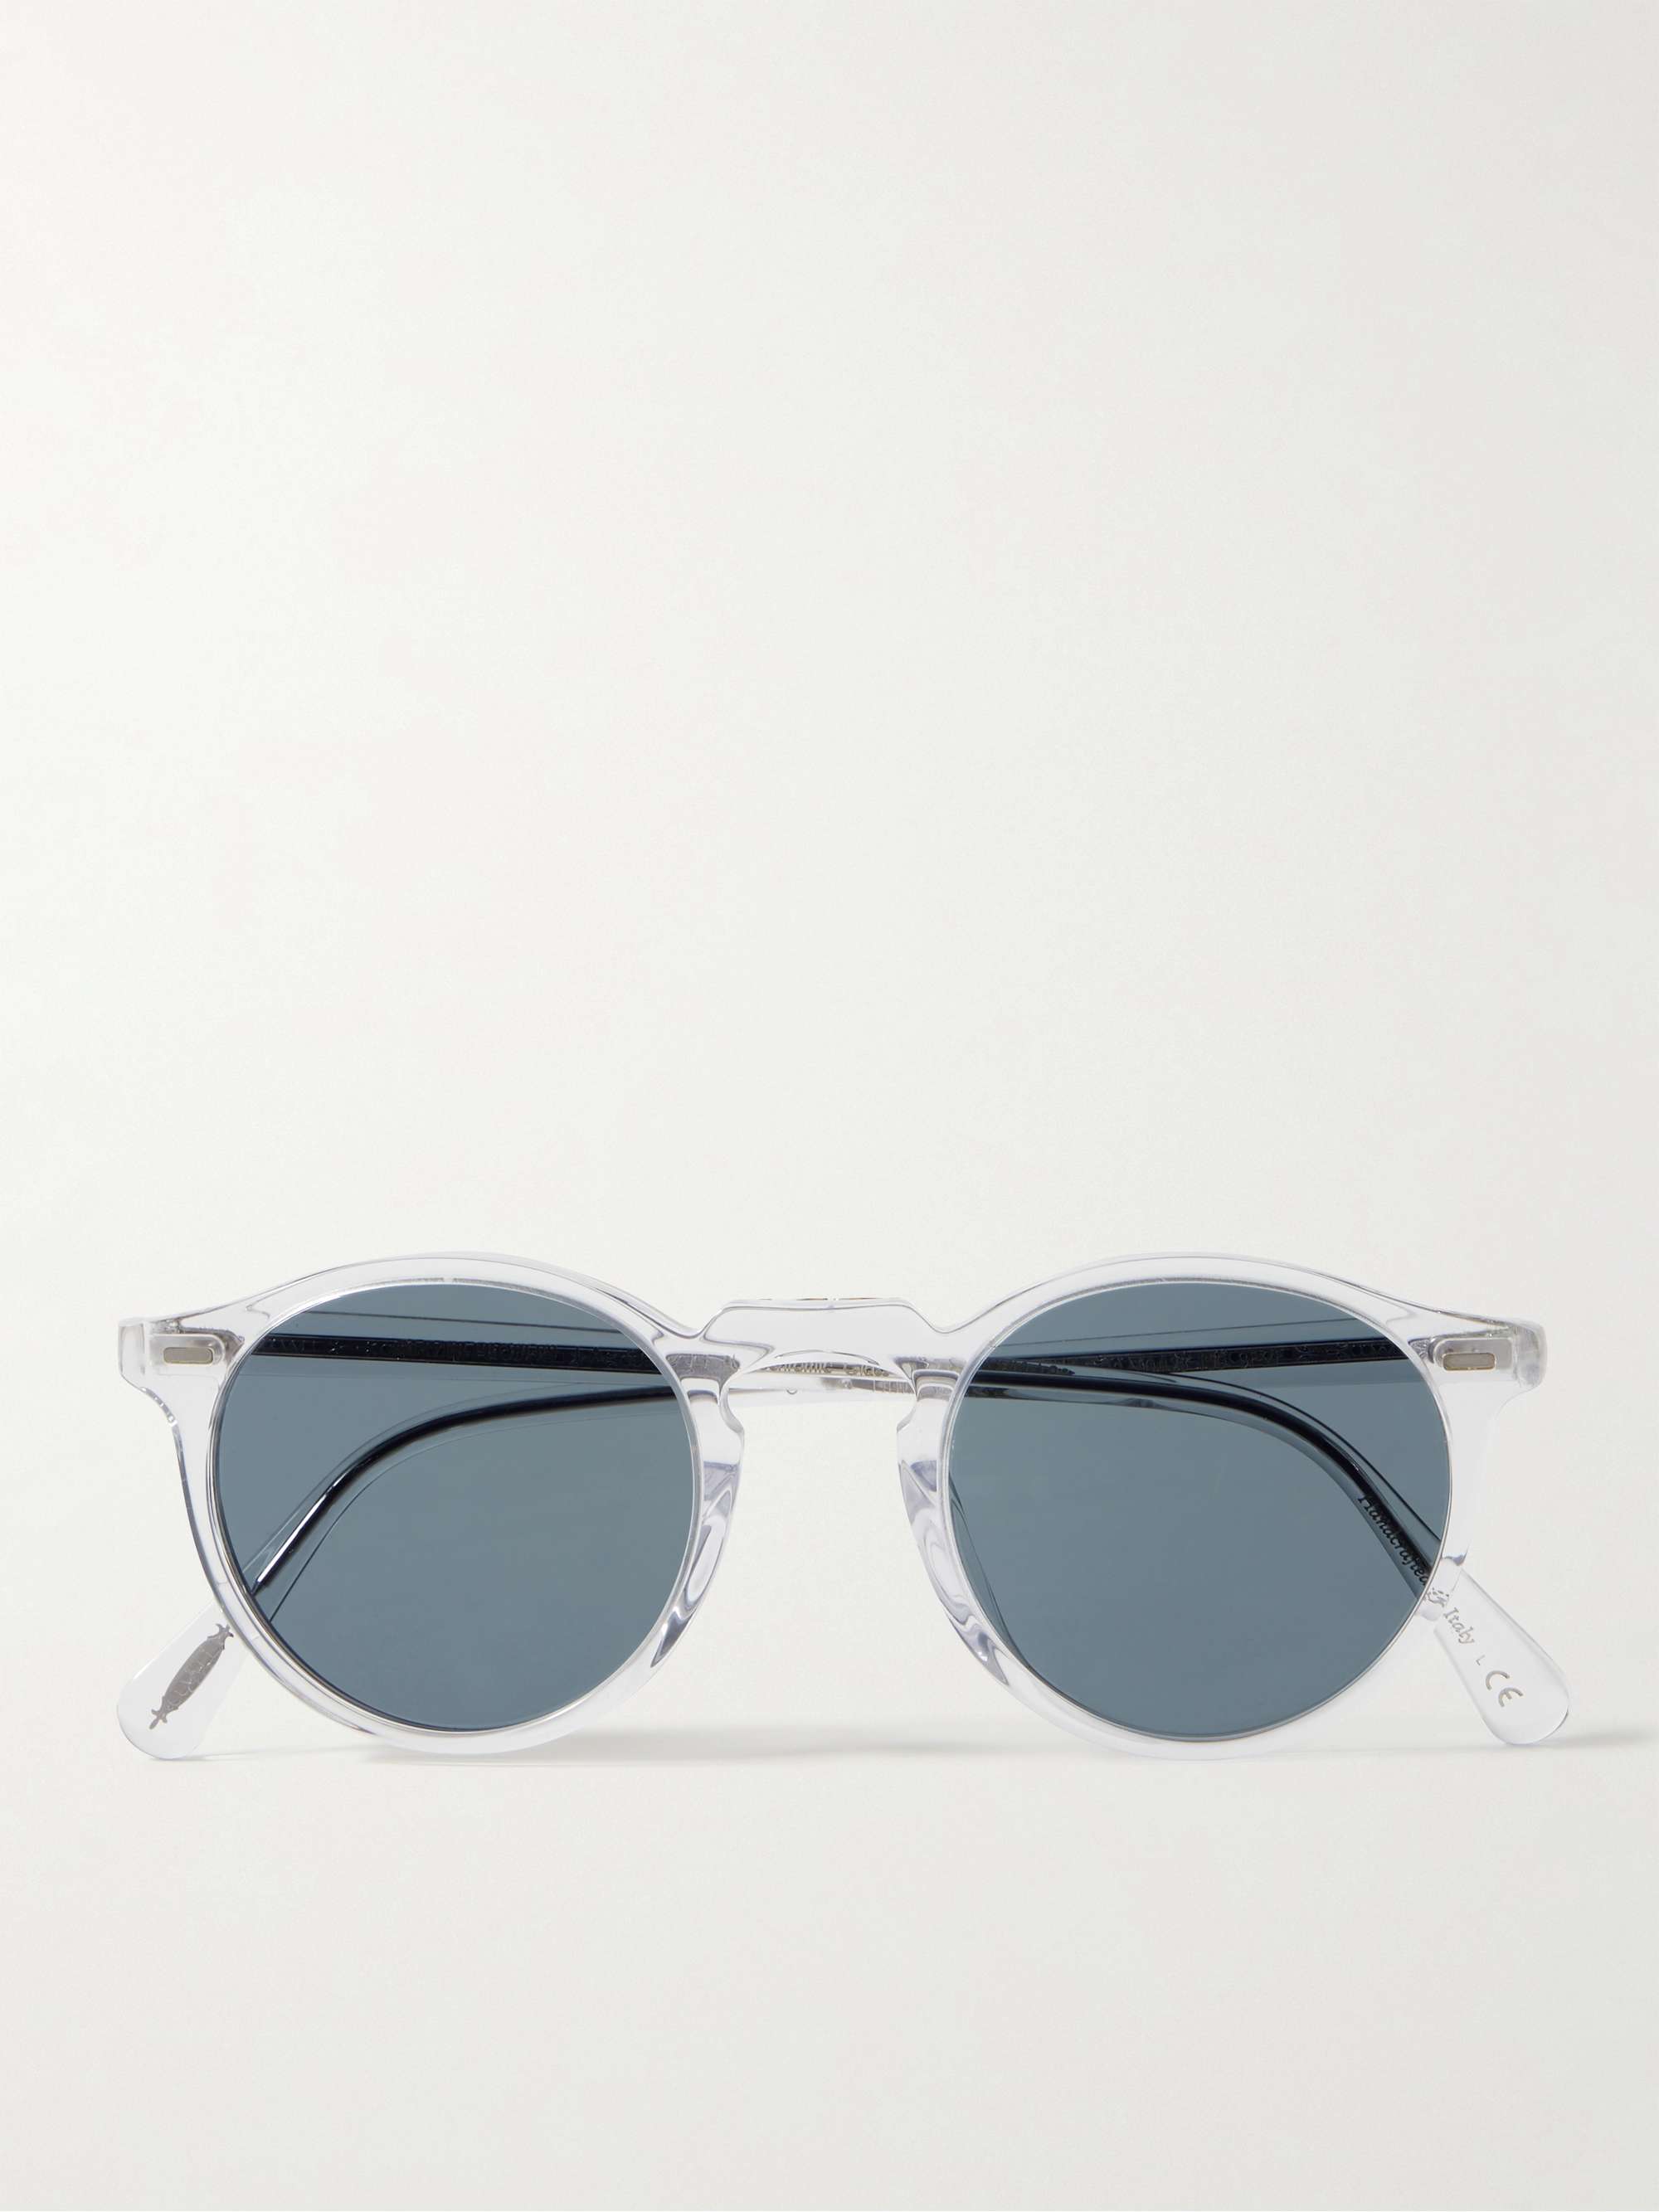 OLIVER PEOPLES Gregory Peck Round-Frame Tortoiseshell Acetate Photochromic Sunglasses